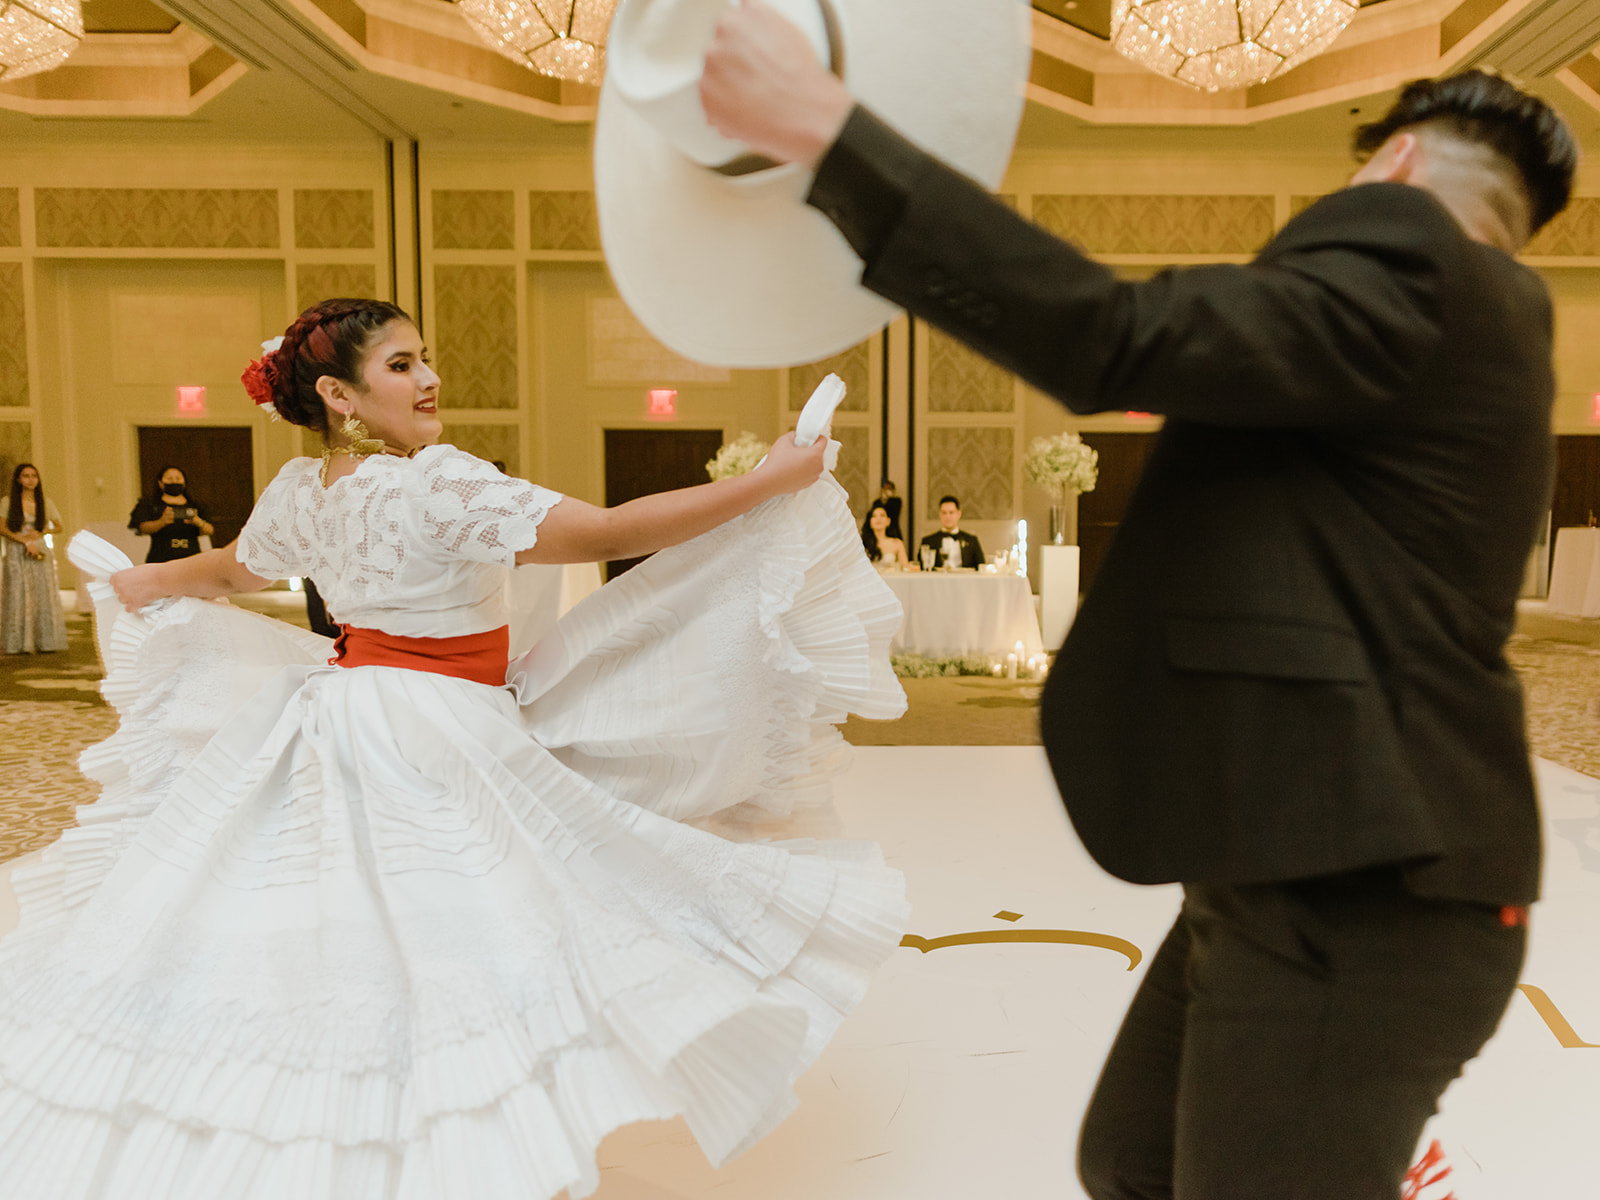 Peruvian dancers at a luxury wedding reception at the Four Seasons Orlando Resort